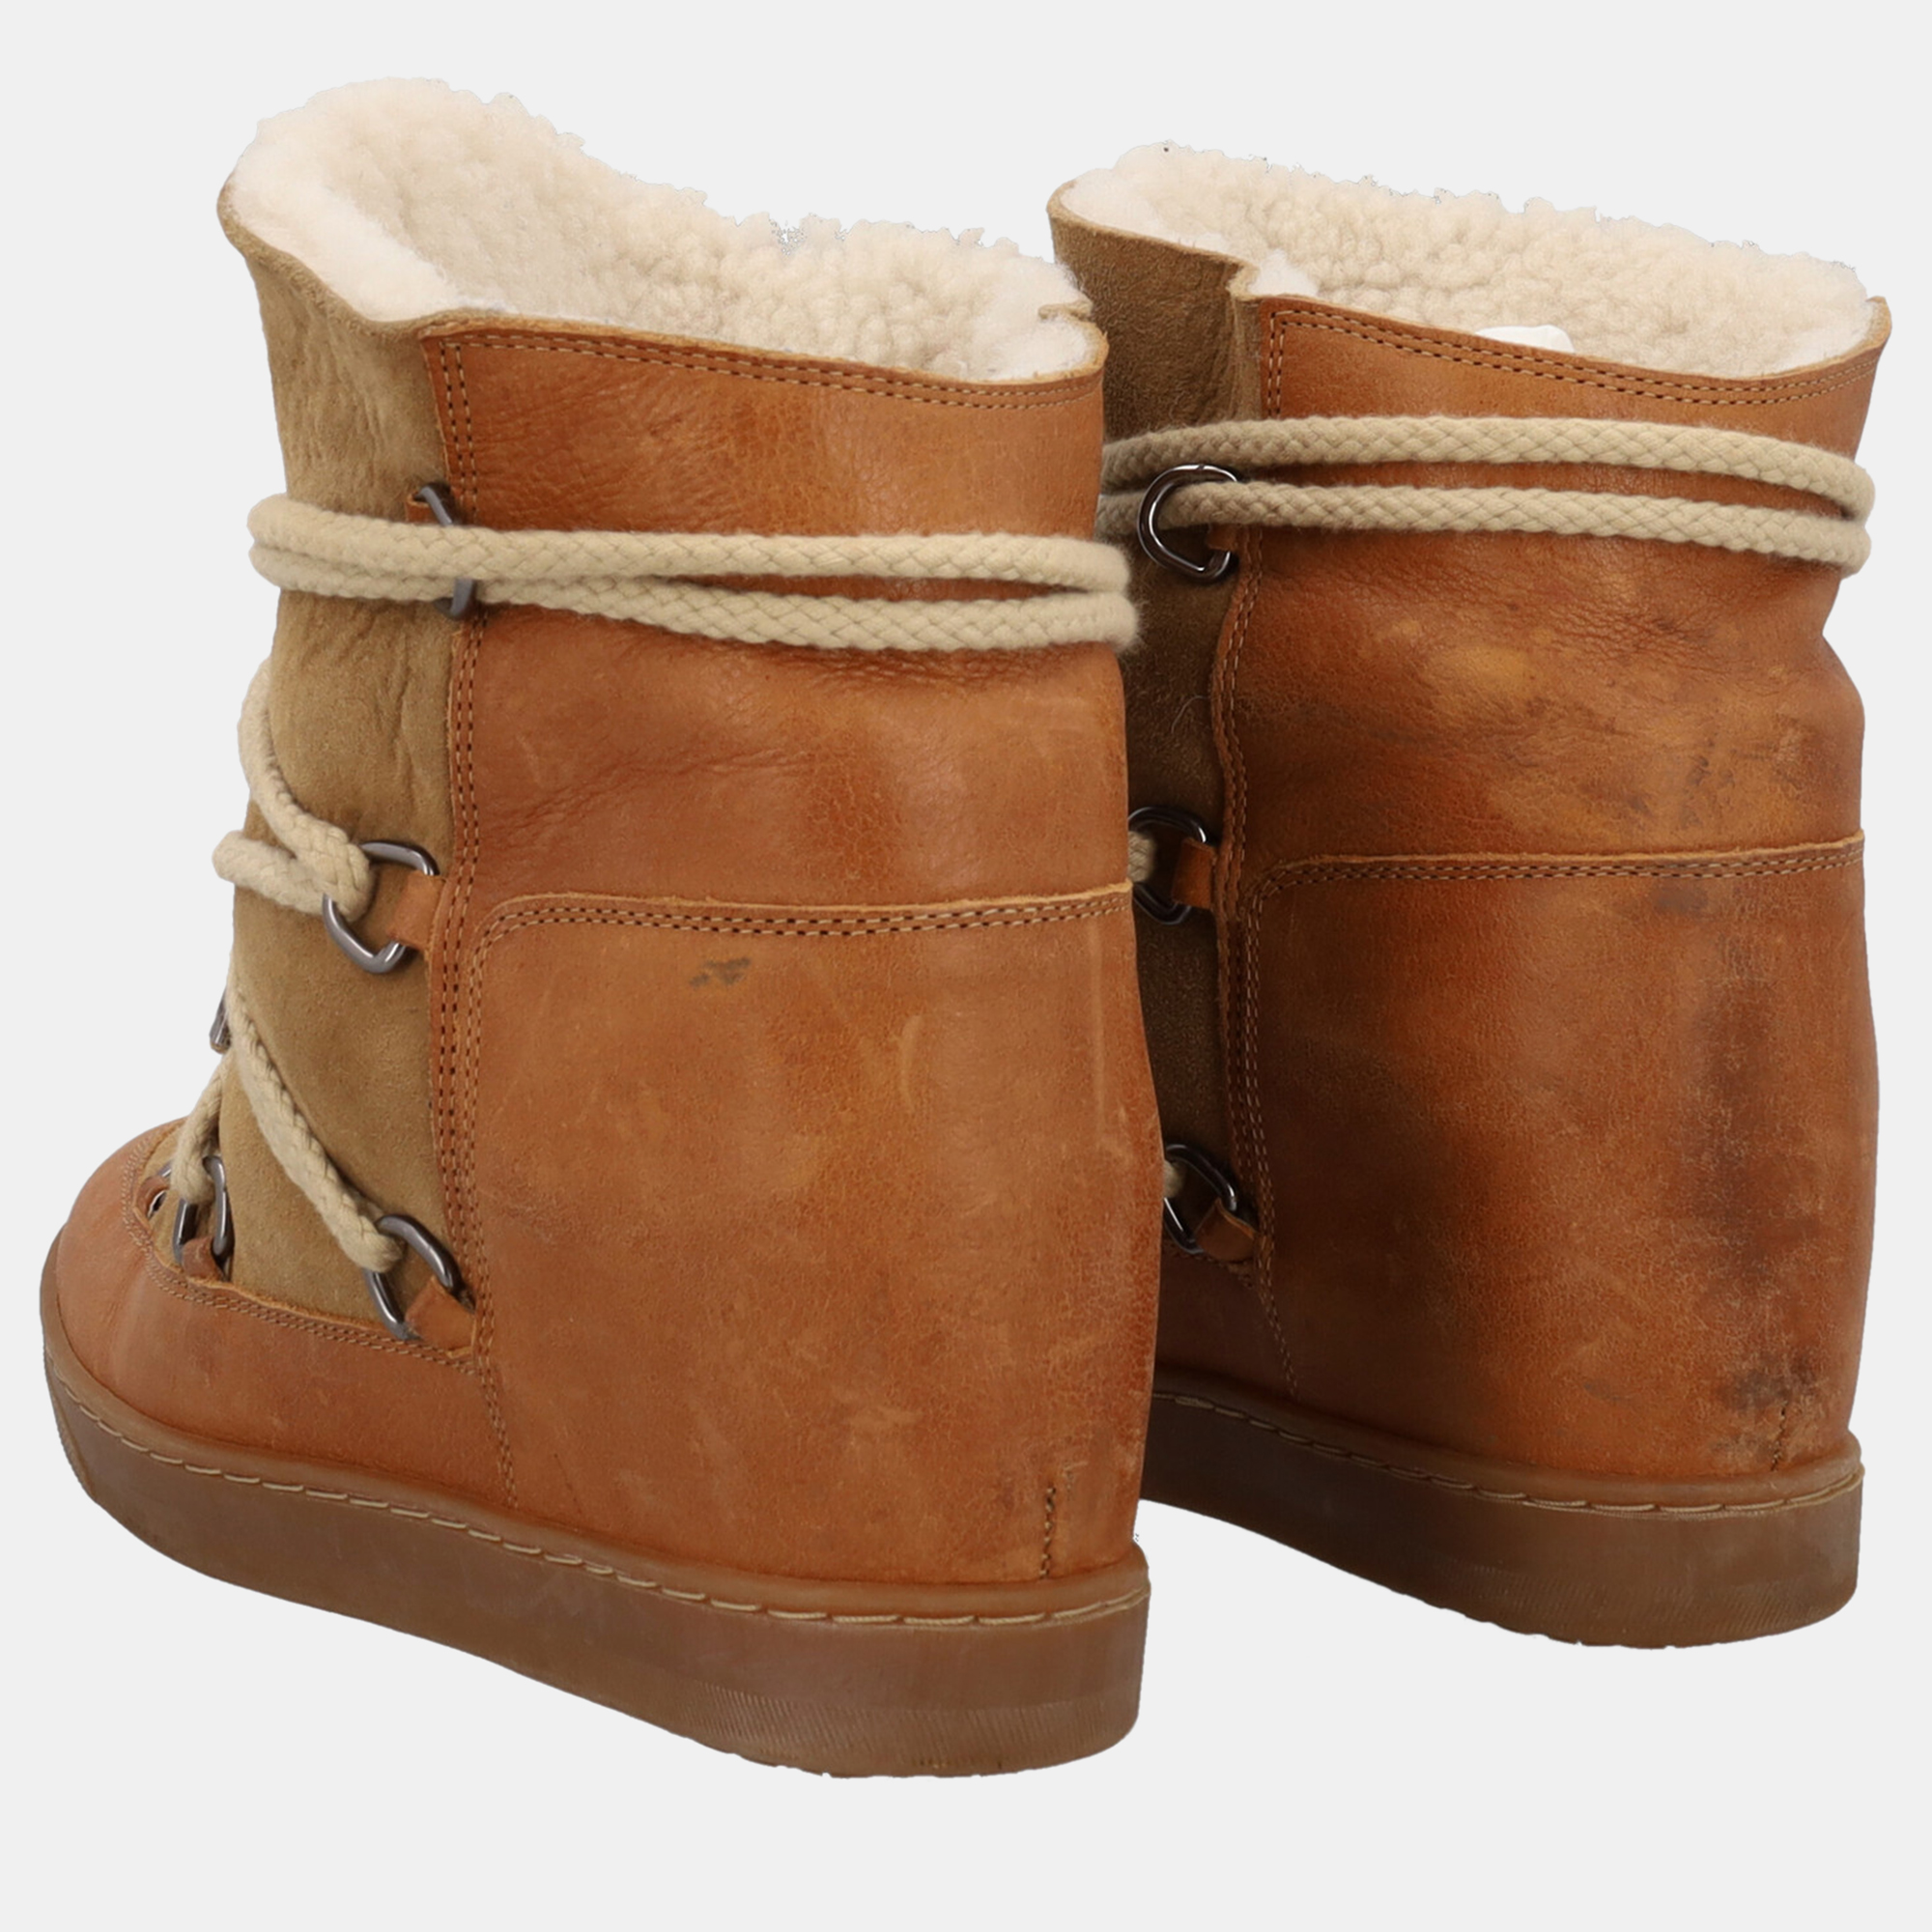 Isabel Marant Etoile  Women's Leather Ankle Boots - Camel Color - EU 39